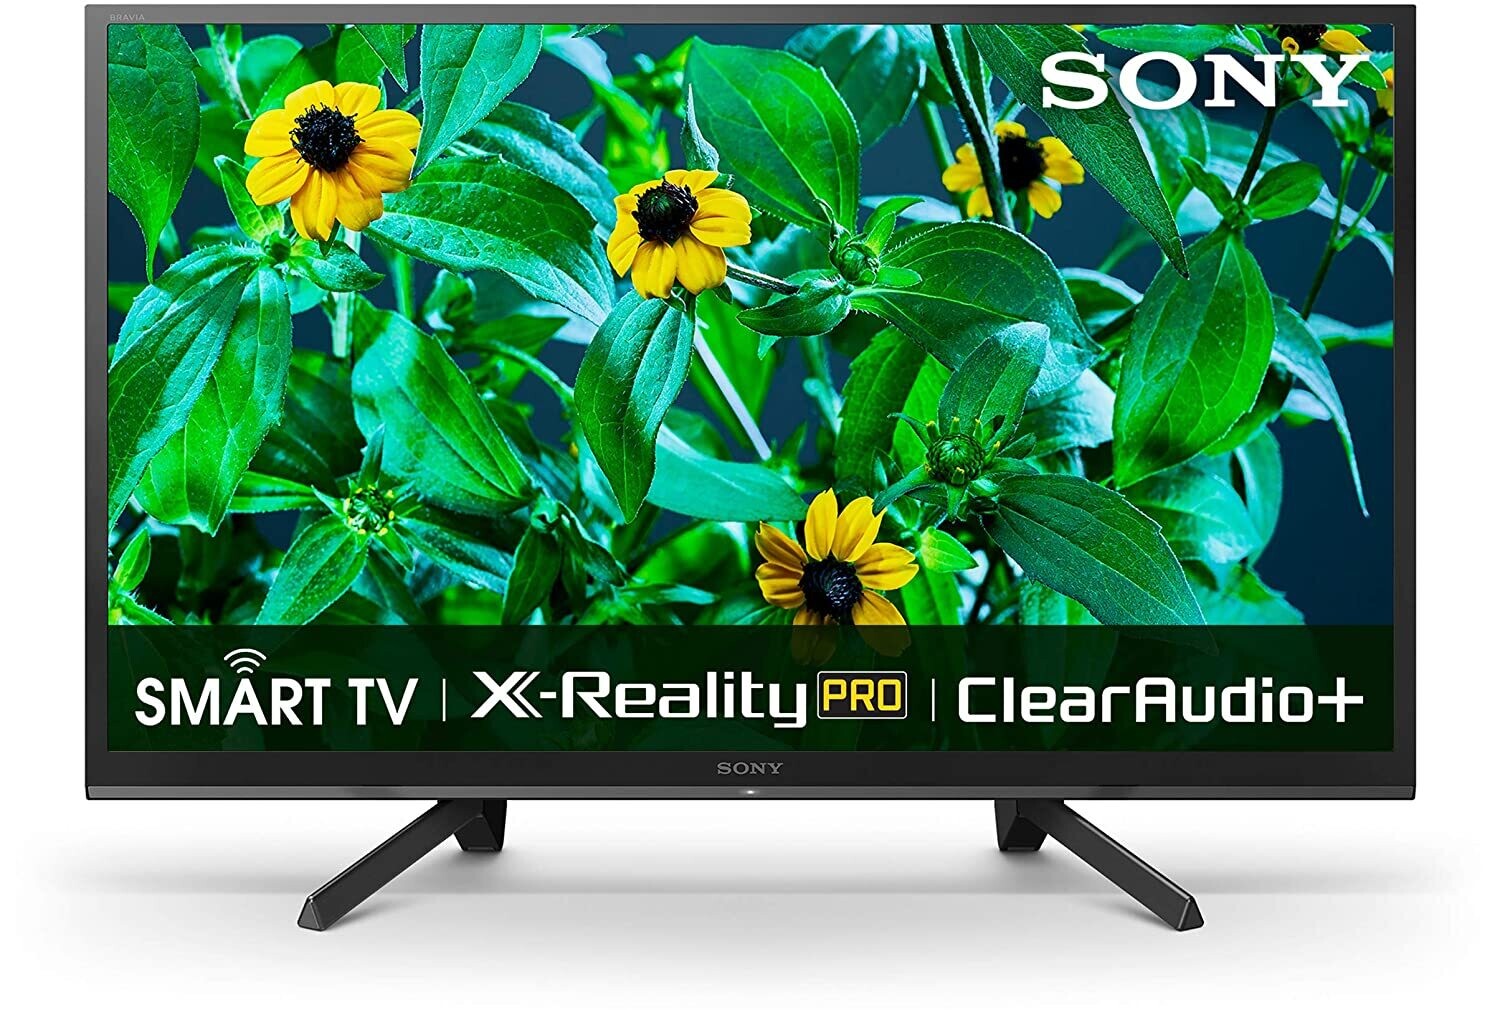 Sony | Smart TV | 80 cm (32 inches) | LED | HD Ready | KLV-32W622G